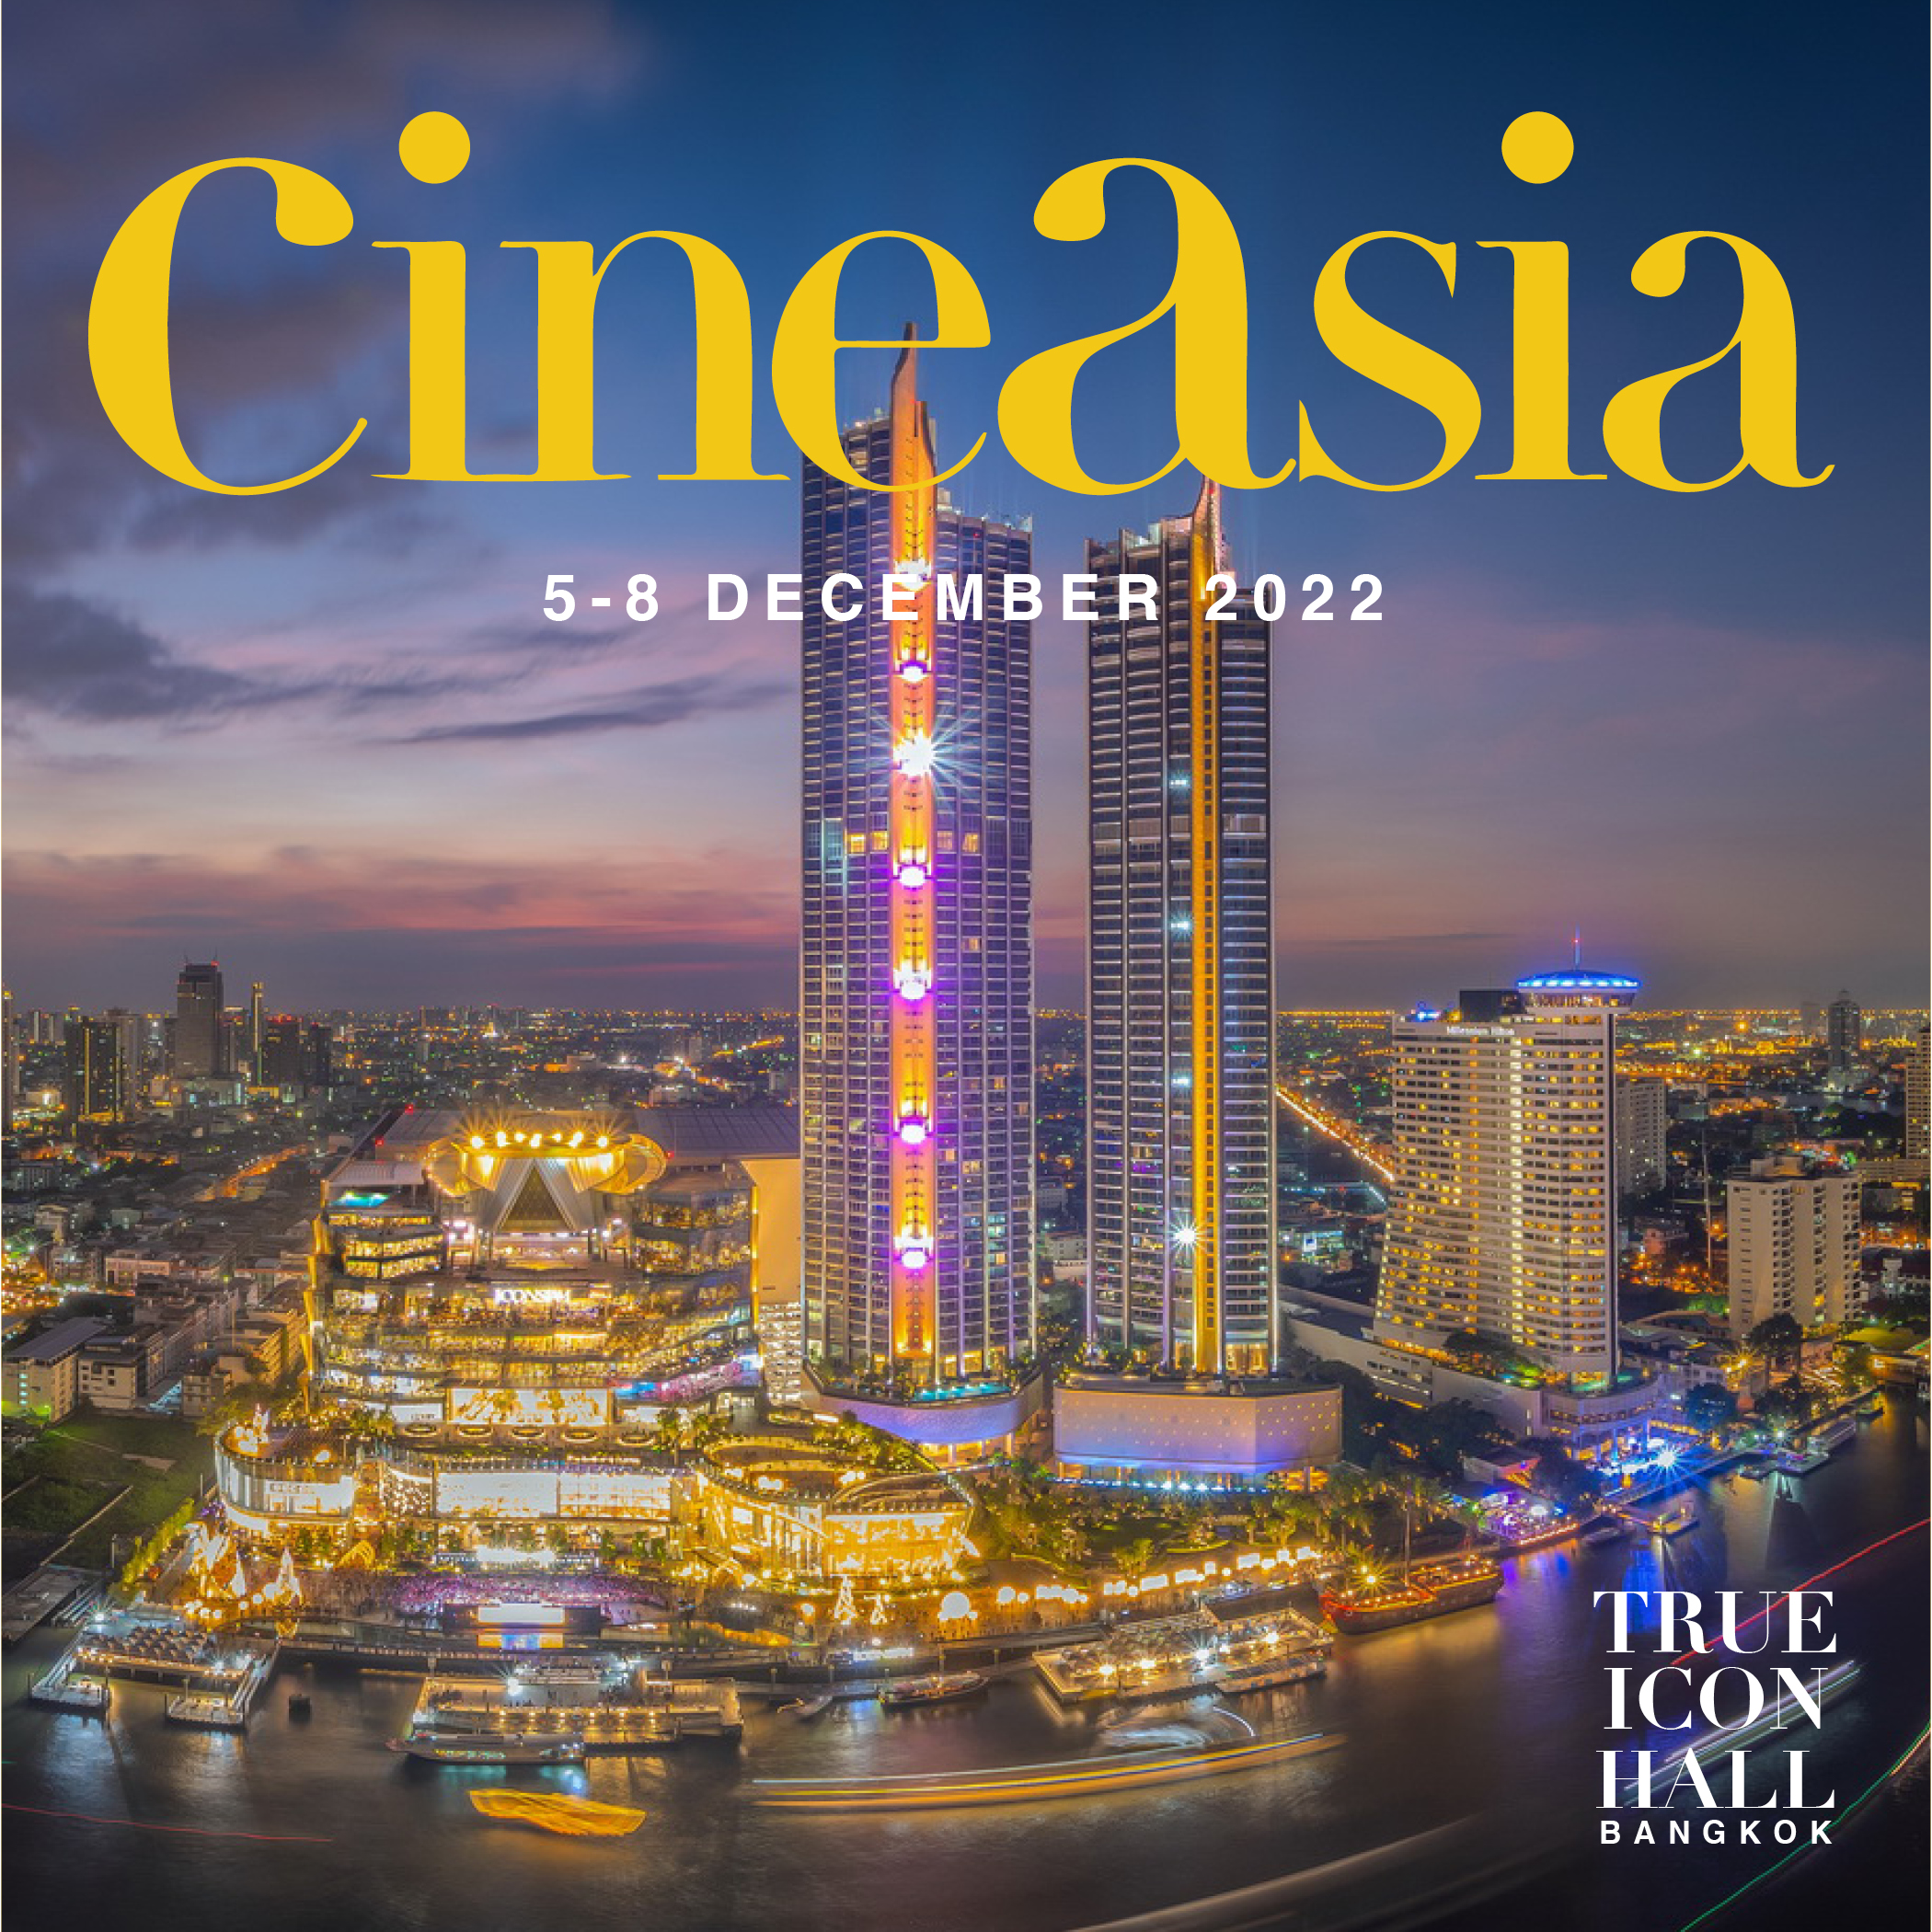 CineAsia 5-8 December 2022 The Icon Hall Bangkok